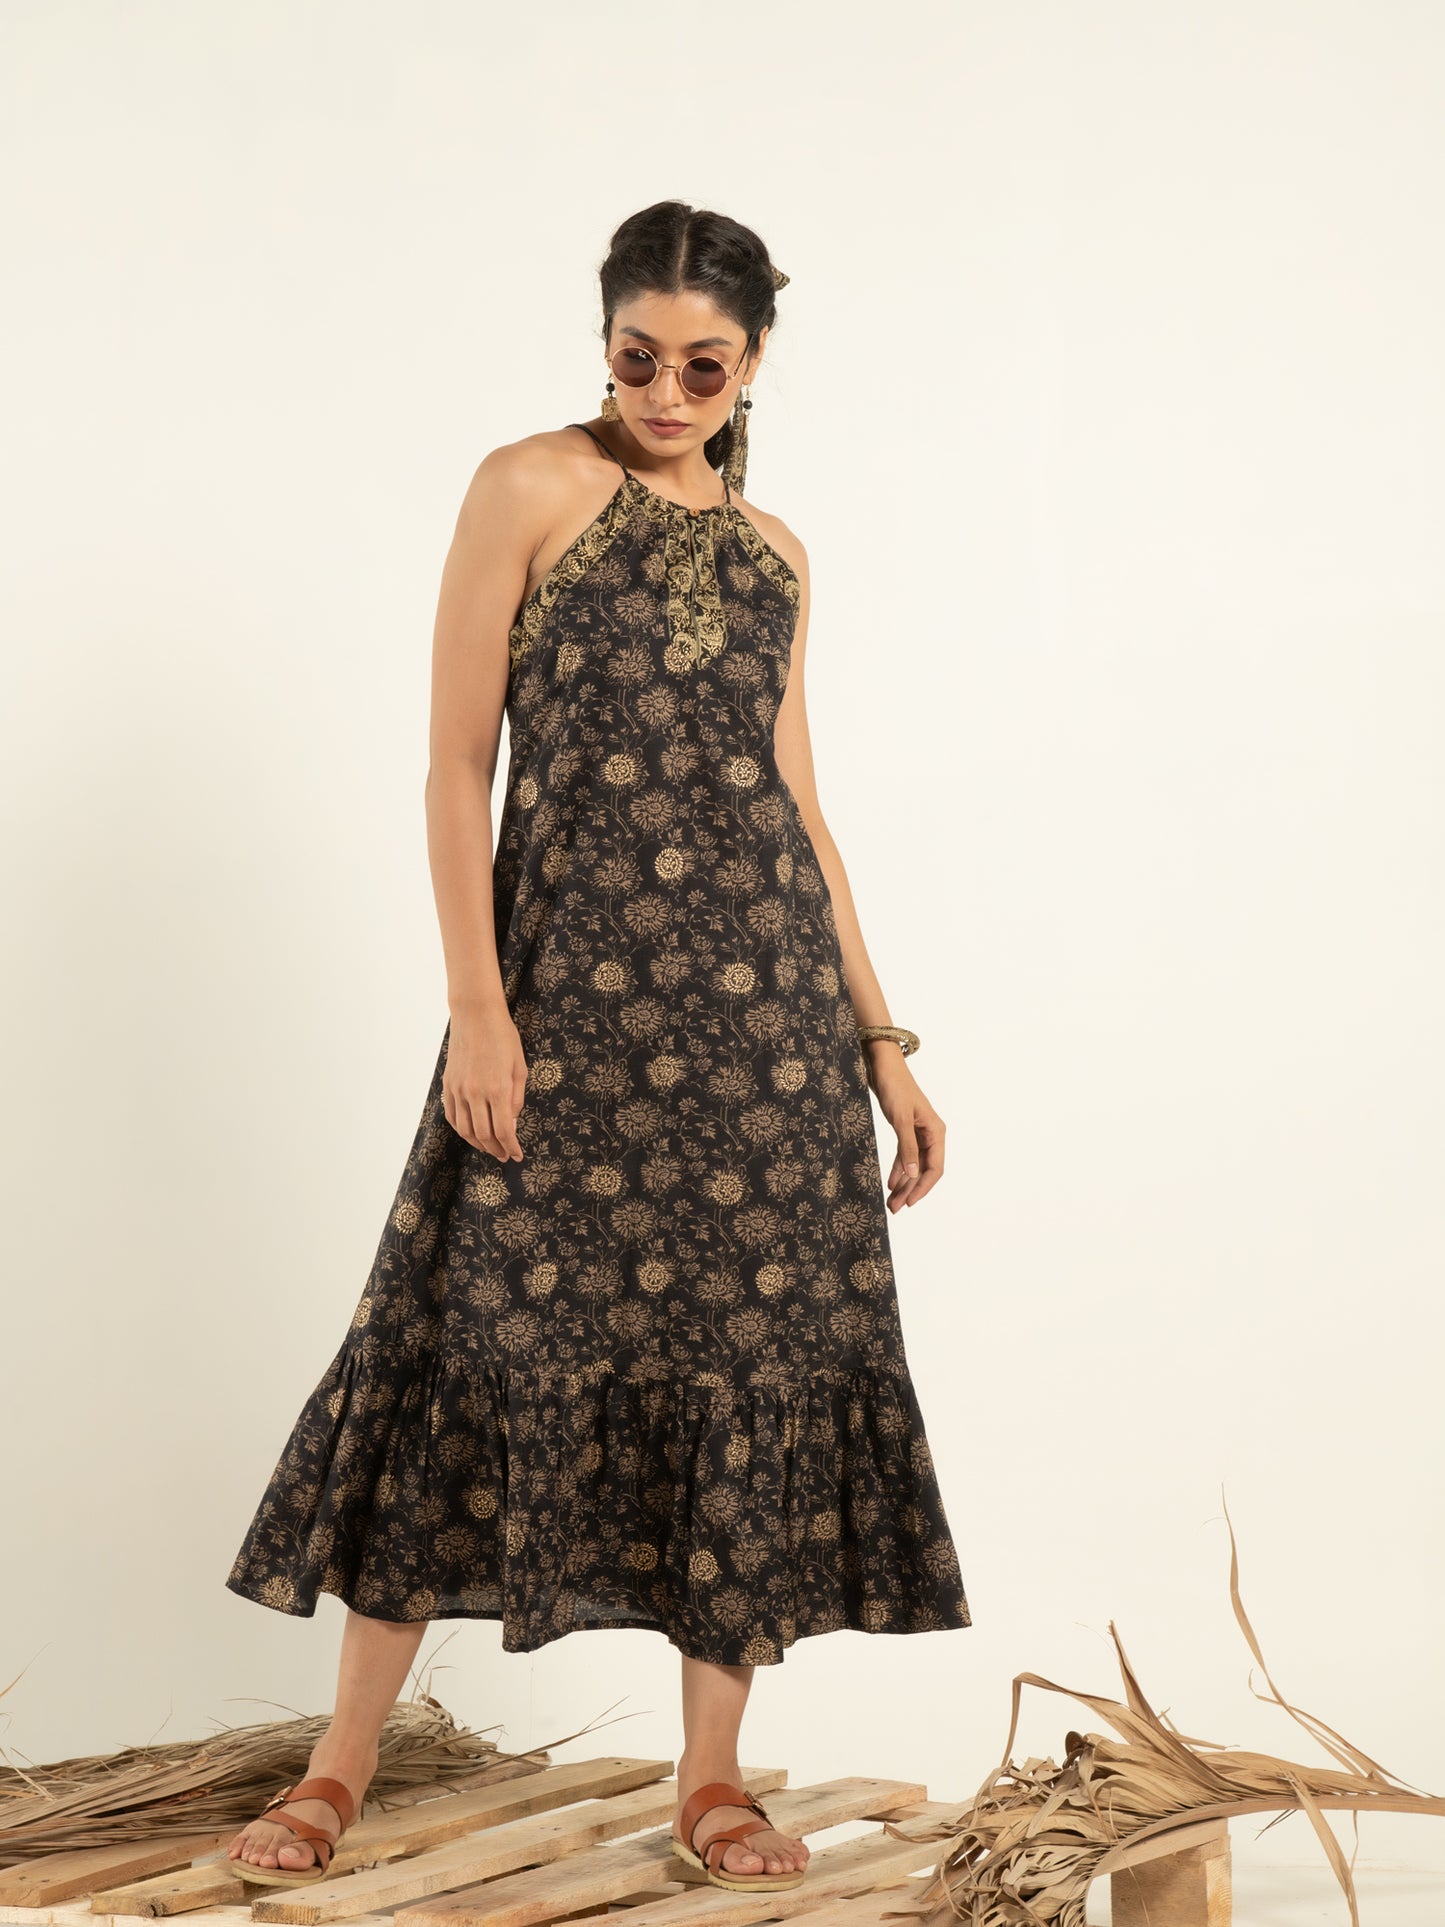 Amalia Flounce Dress - Black Hand Block Printed Cotton Flounce Dress